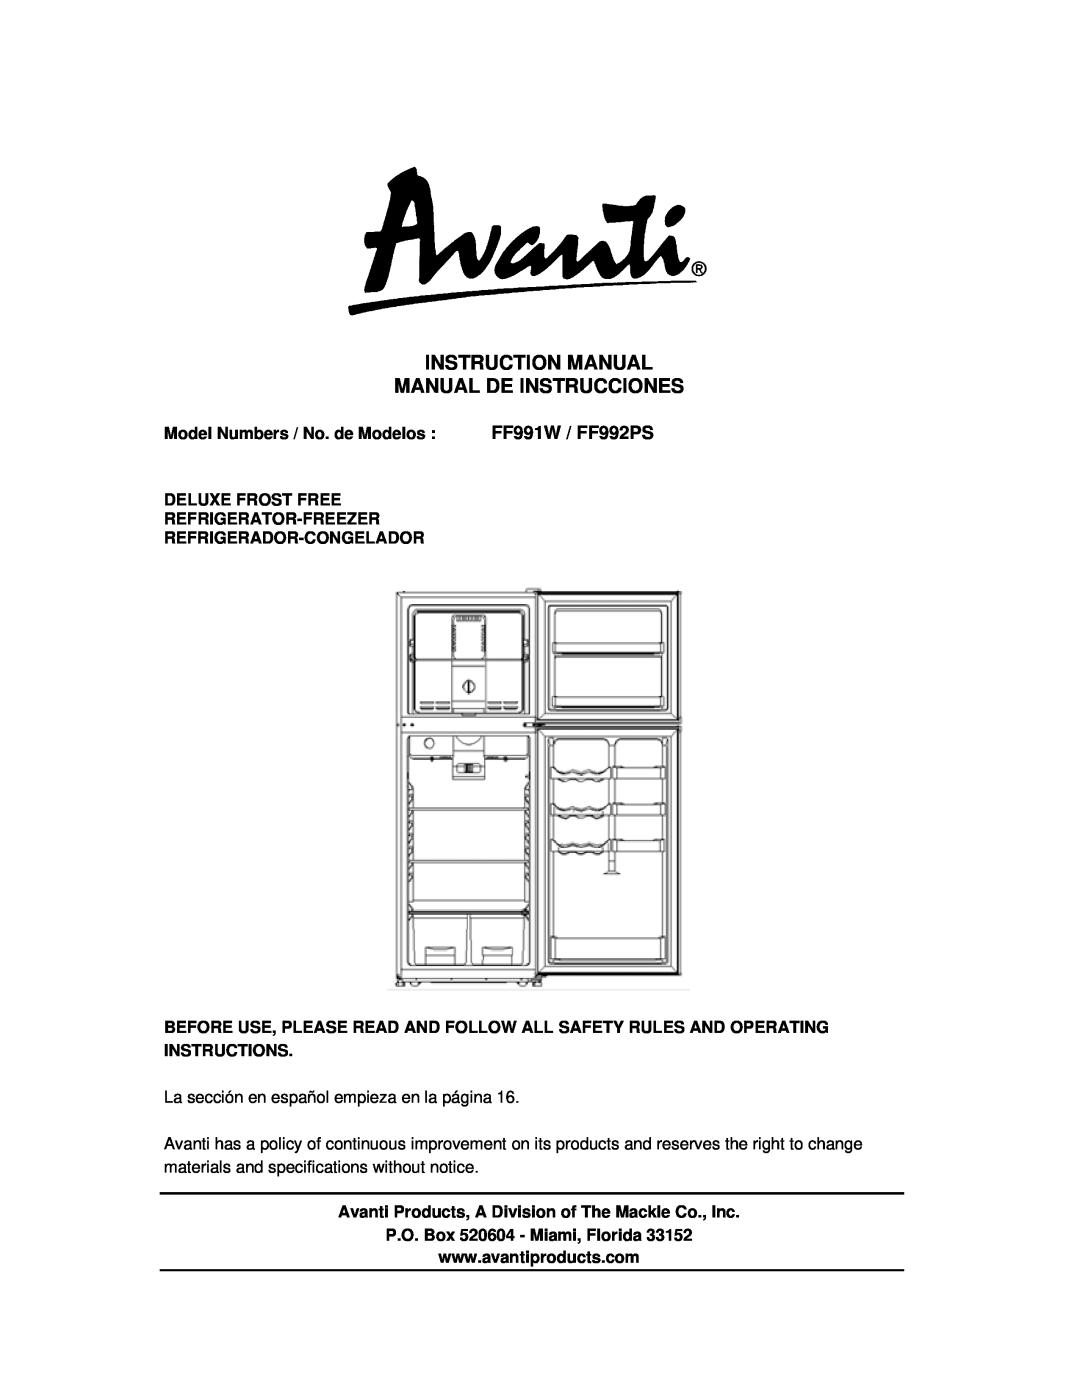 Avanti instruction manual Model Numbers / No. de Modelos, FF991W / FF992PS, Deluxe Frost Free Refrigerator-Freezer 